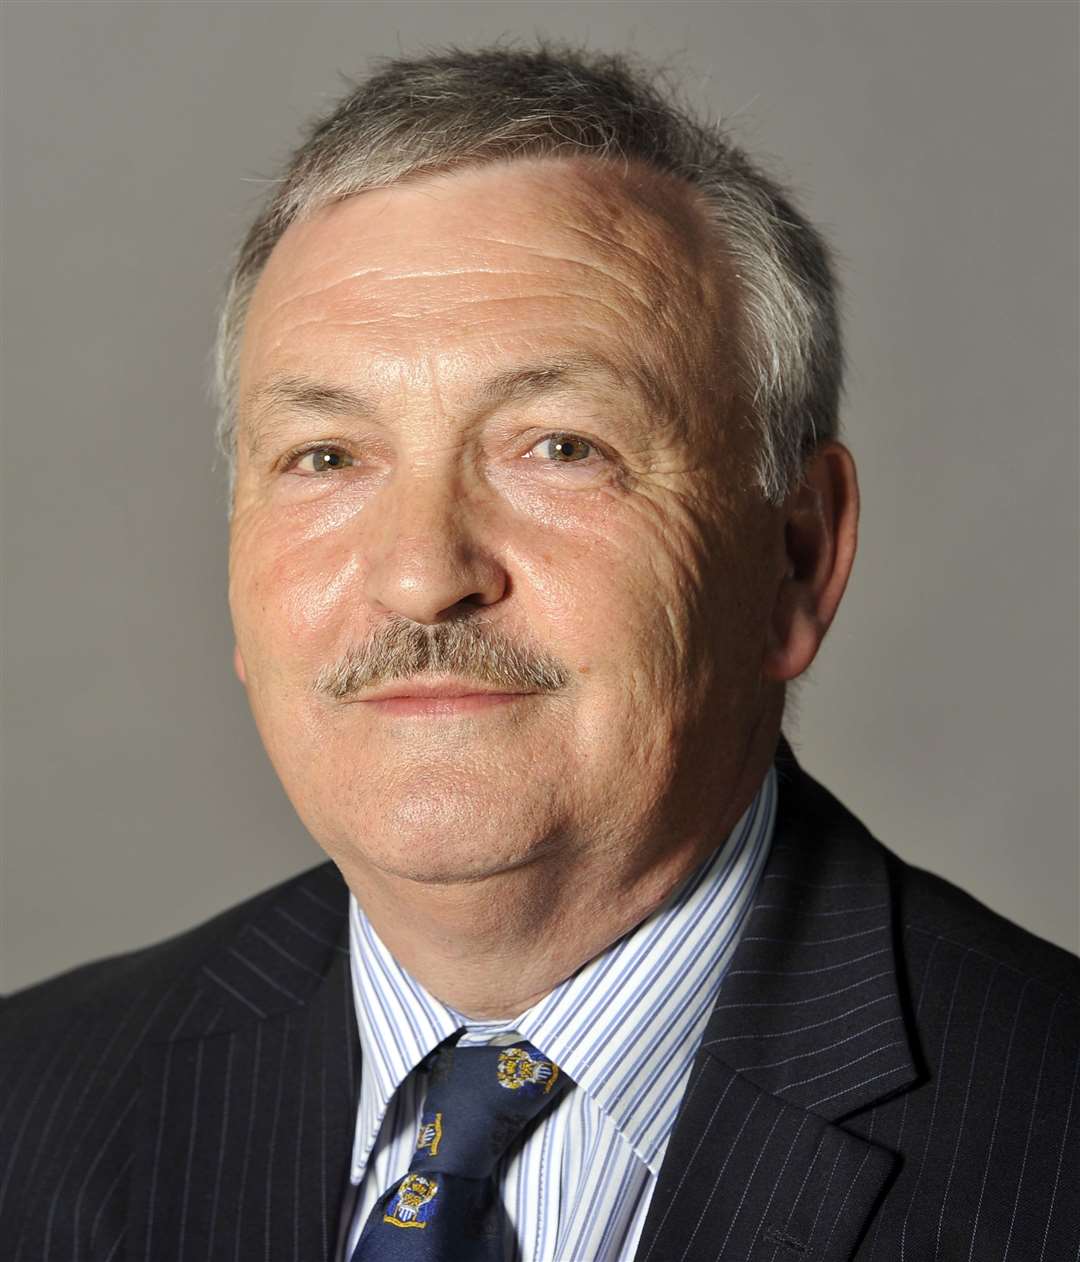 Medway Council leader Cllr Alan Jarrett